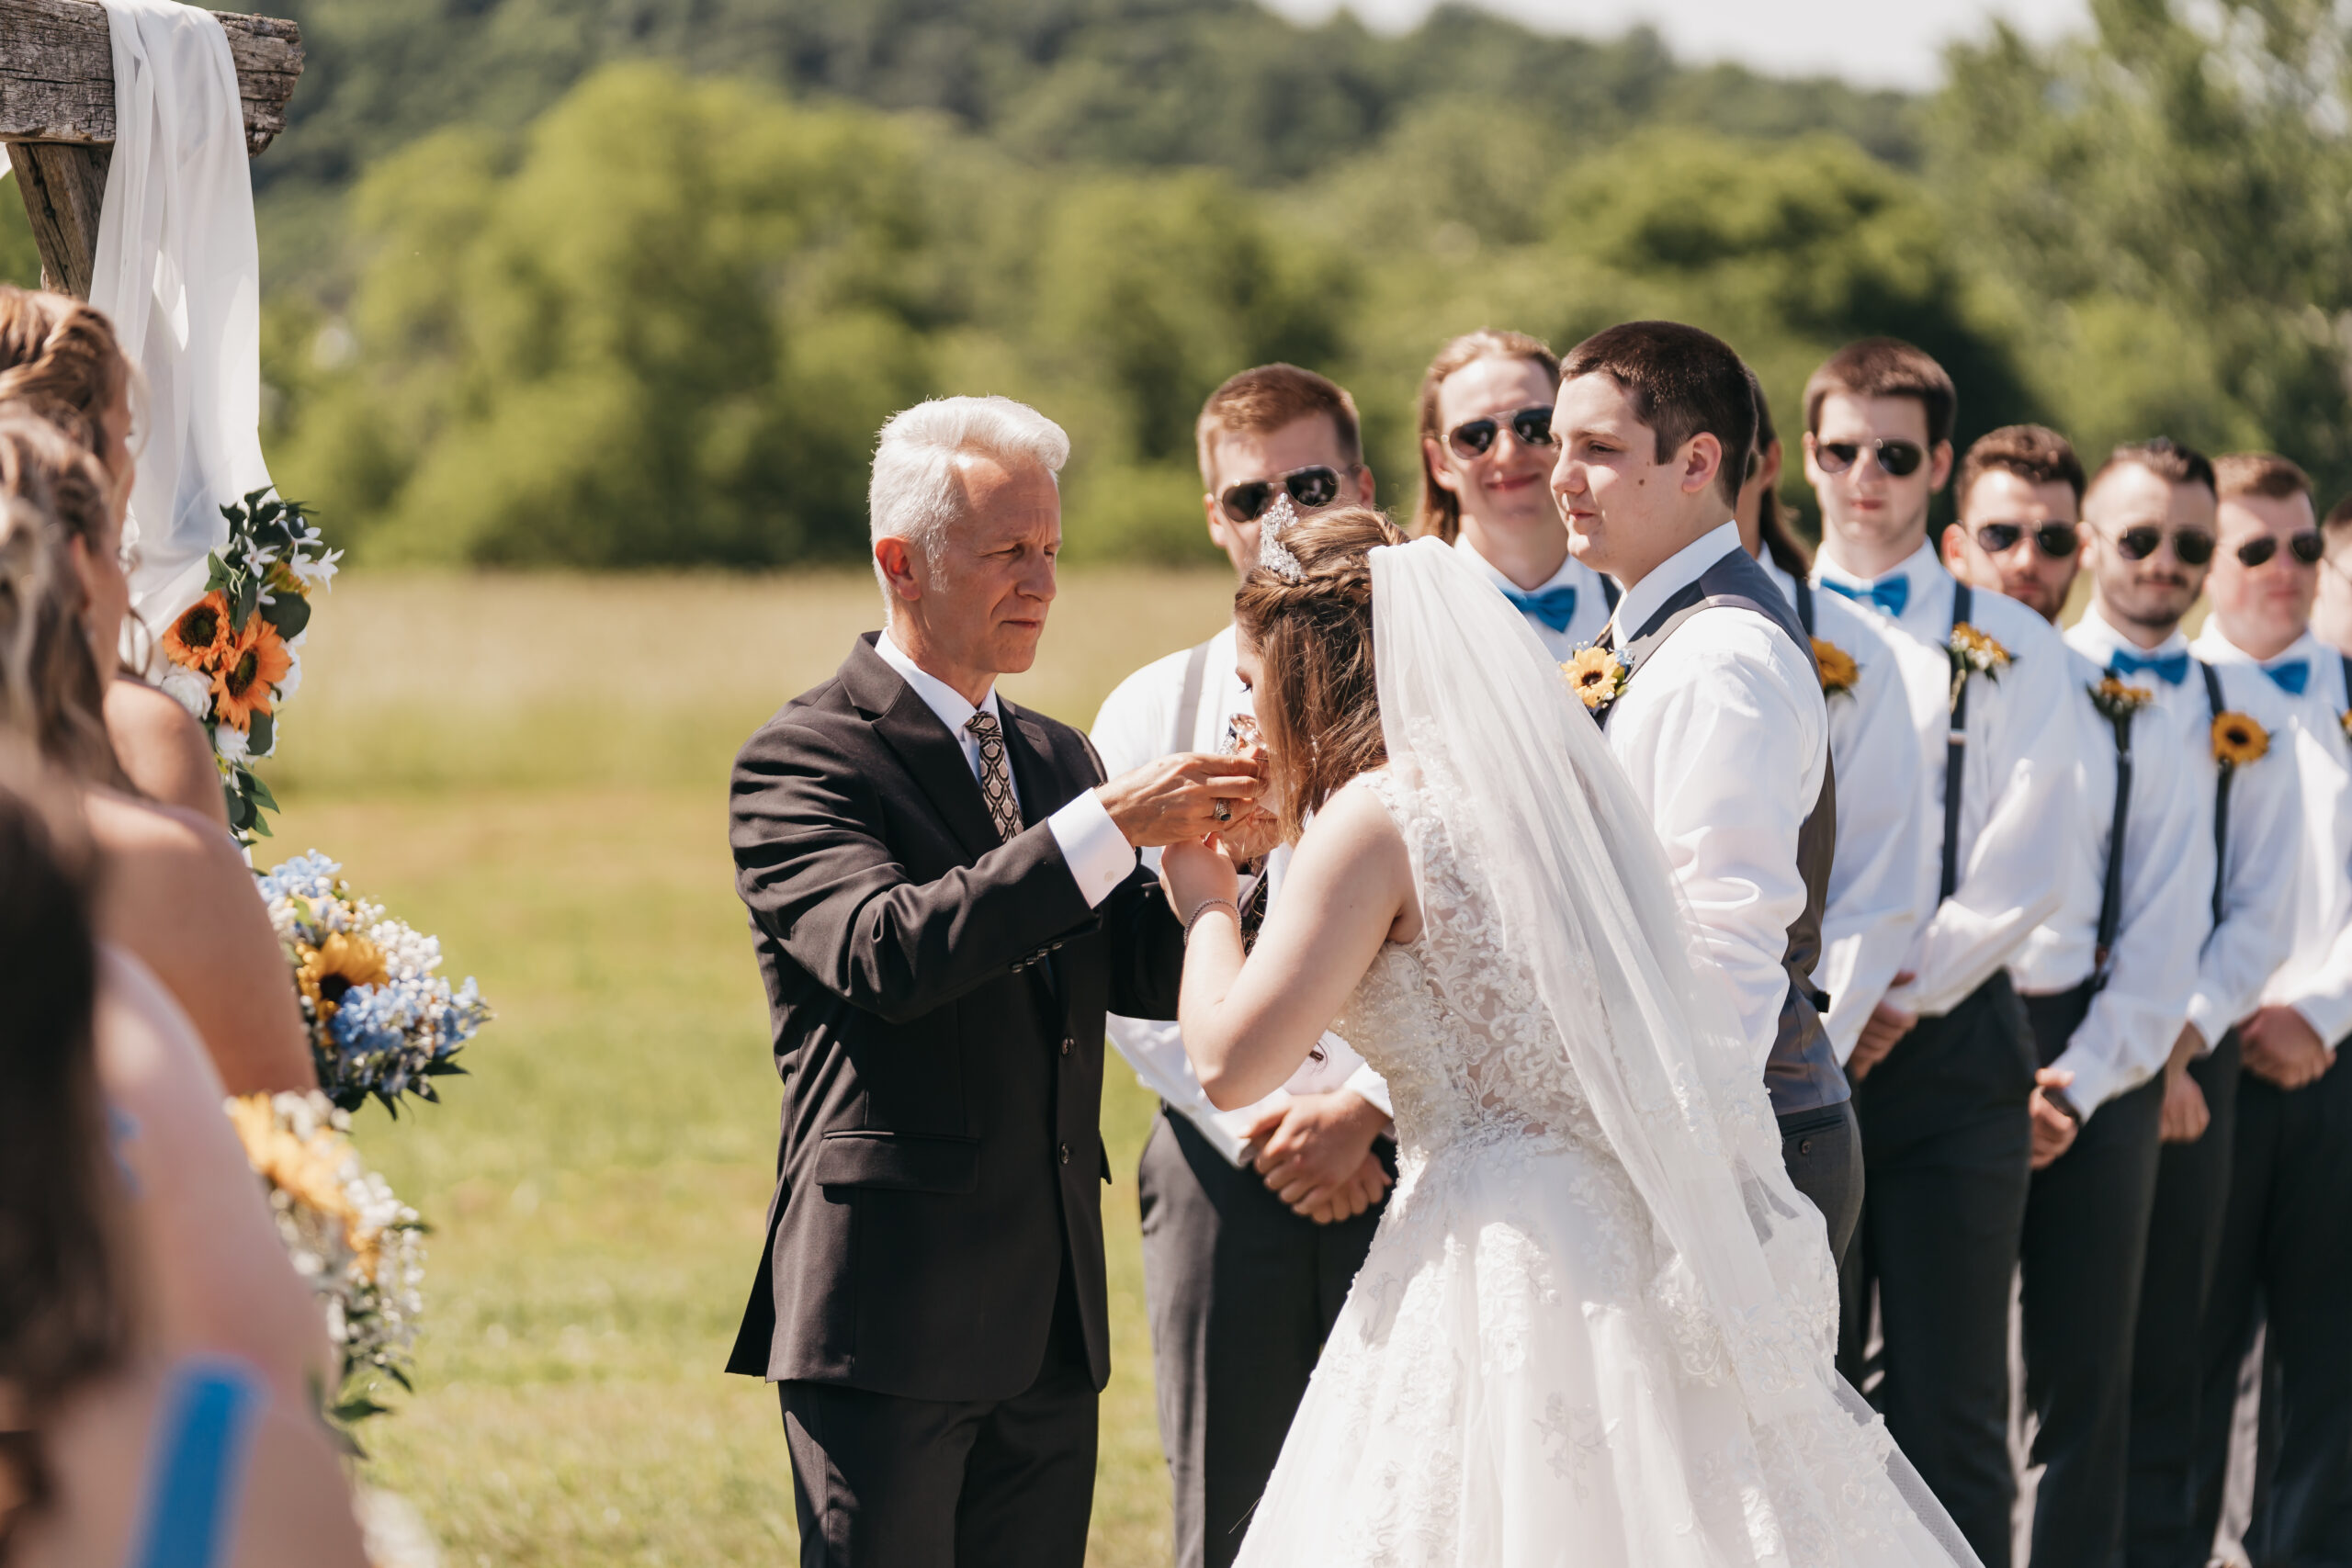 Bride taking communion during their wedding ceremony, captured by Loudoun wedding photographer Rachel Yearick